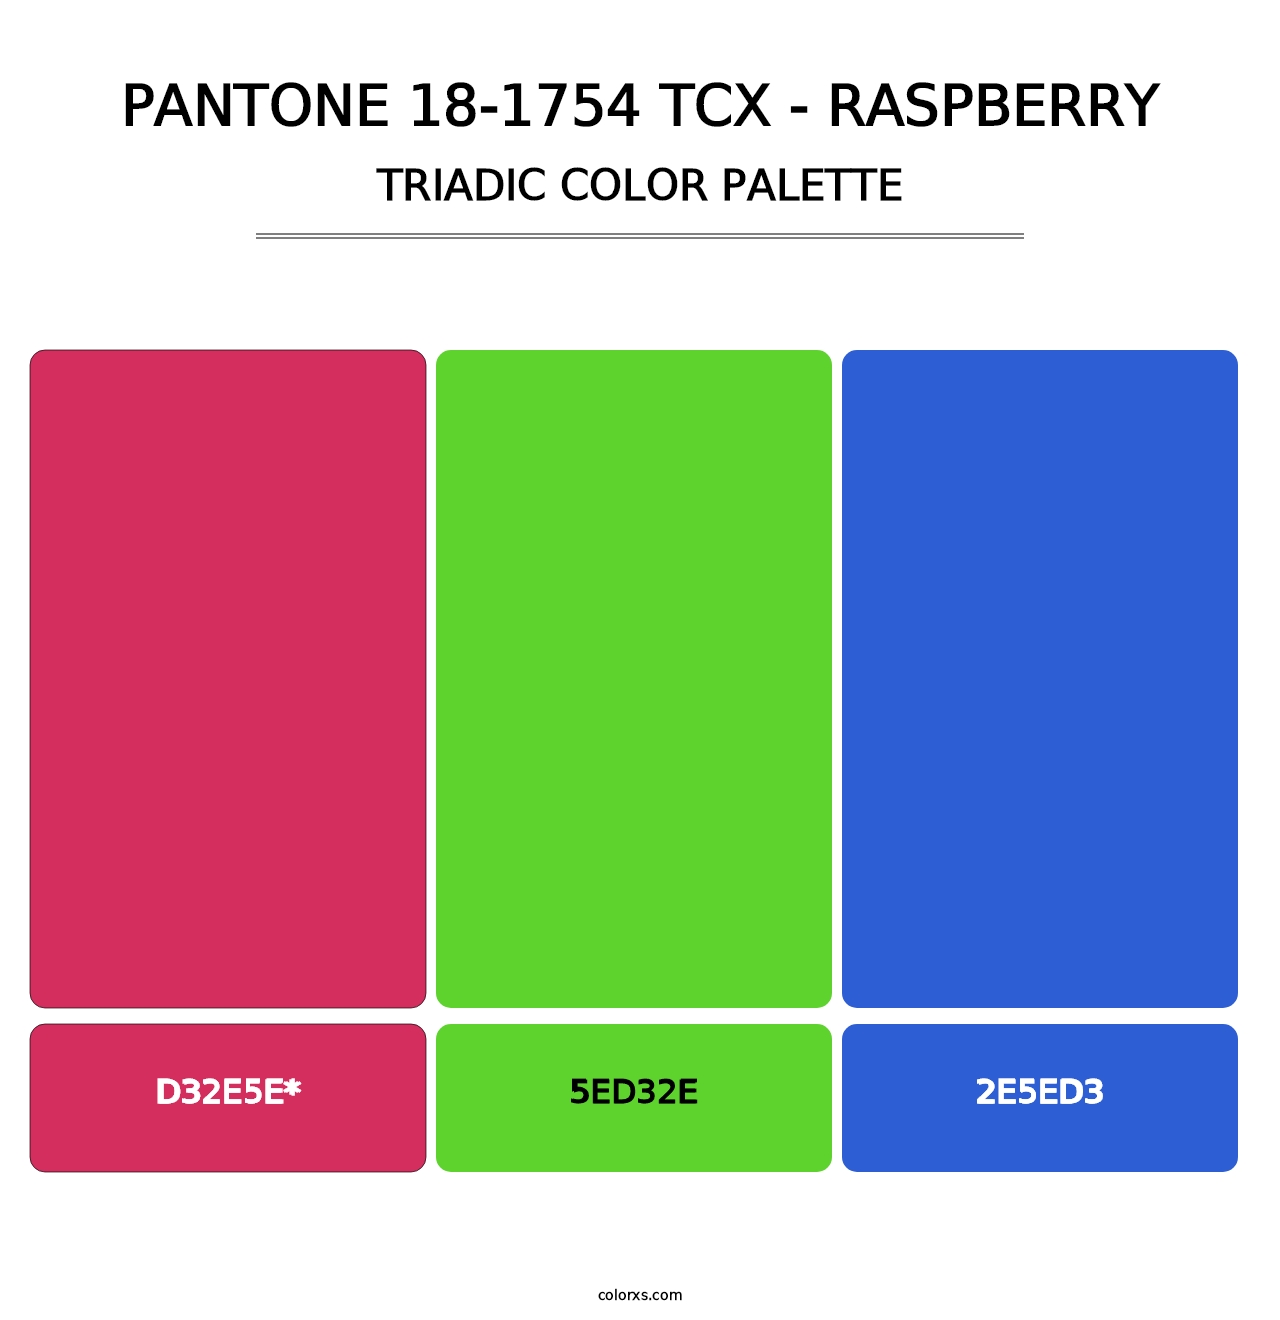 PANTONE 18-1754 TCX - Raspberry - Triadic Color Palette